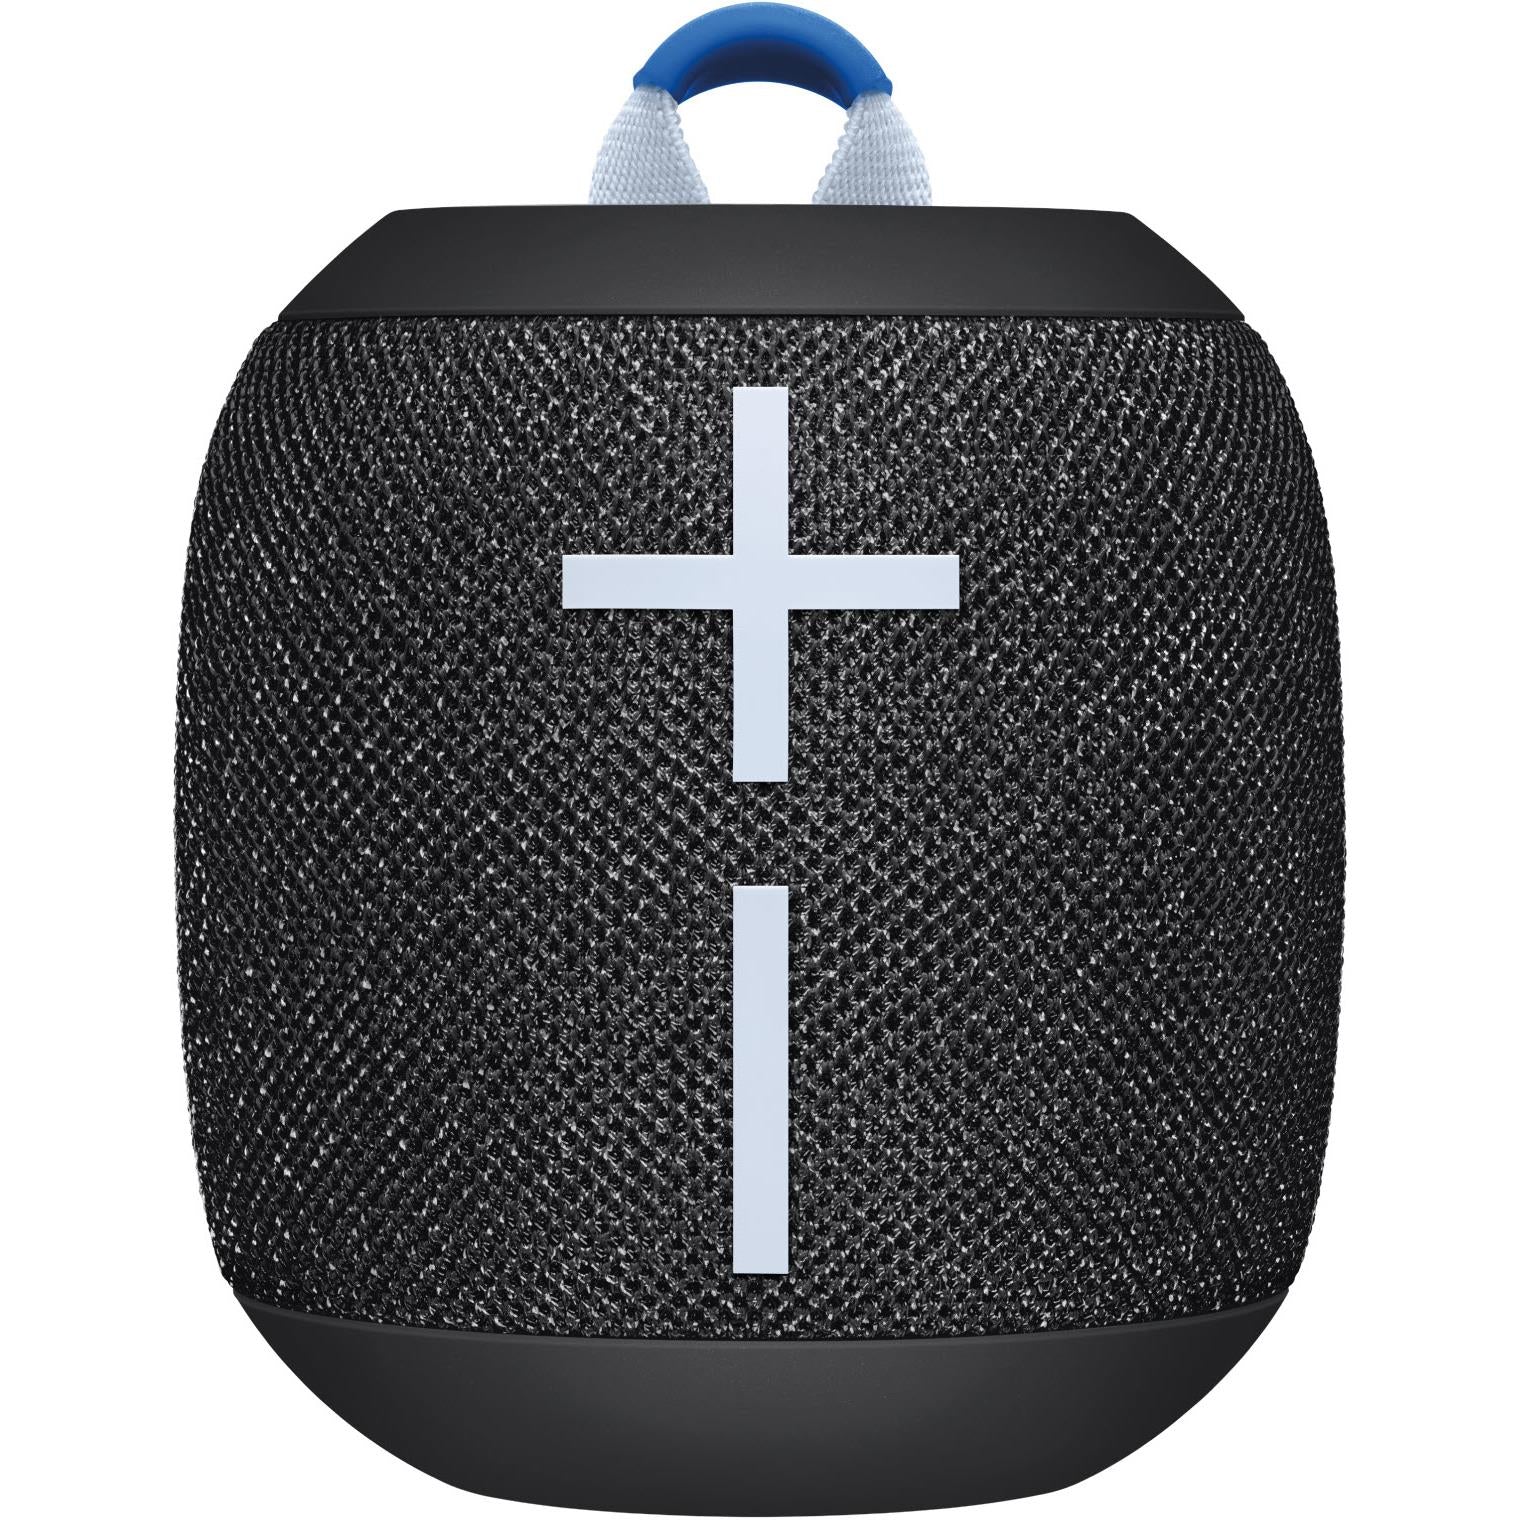 BOOM 3 Bluetooth Speaker  Ultimate Ears Speaker with Deep Bass